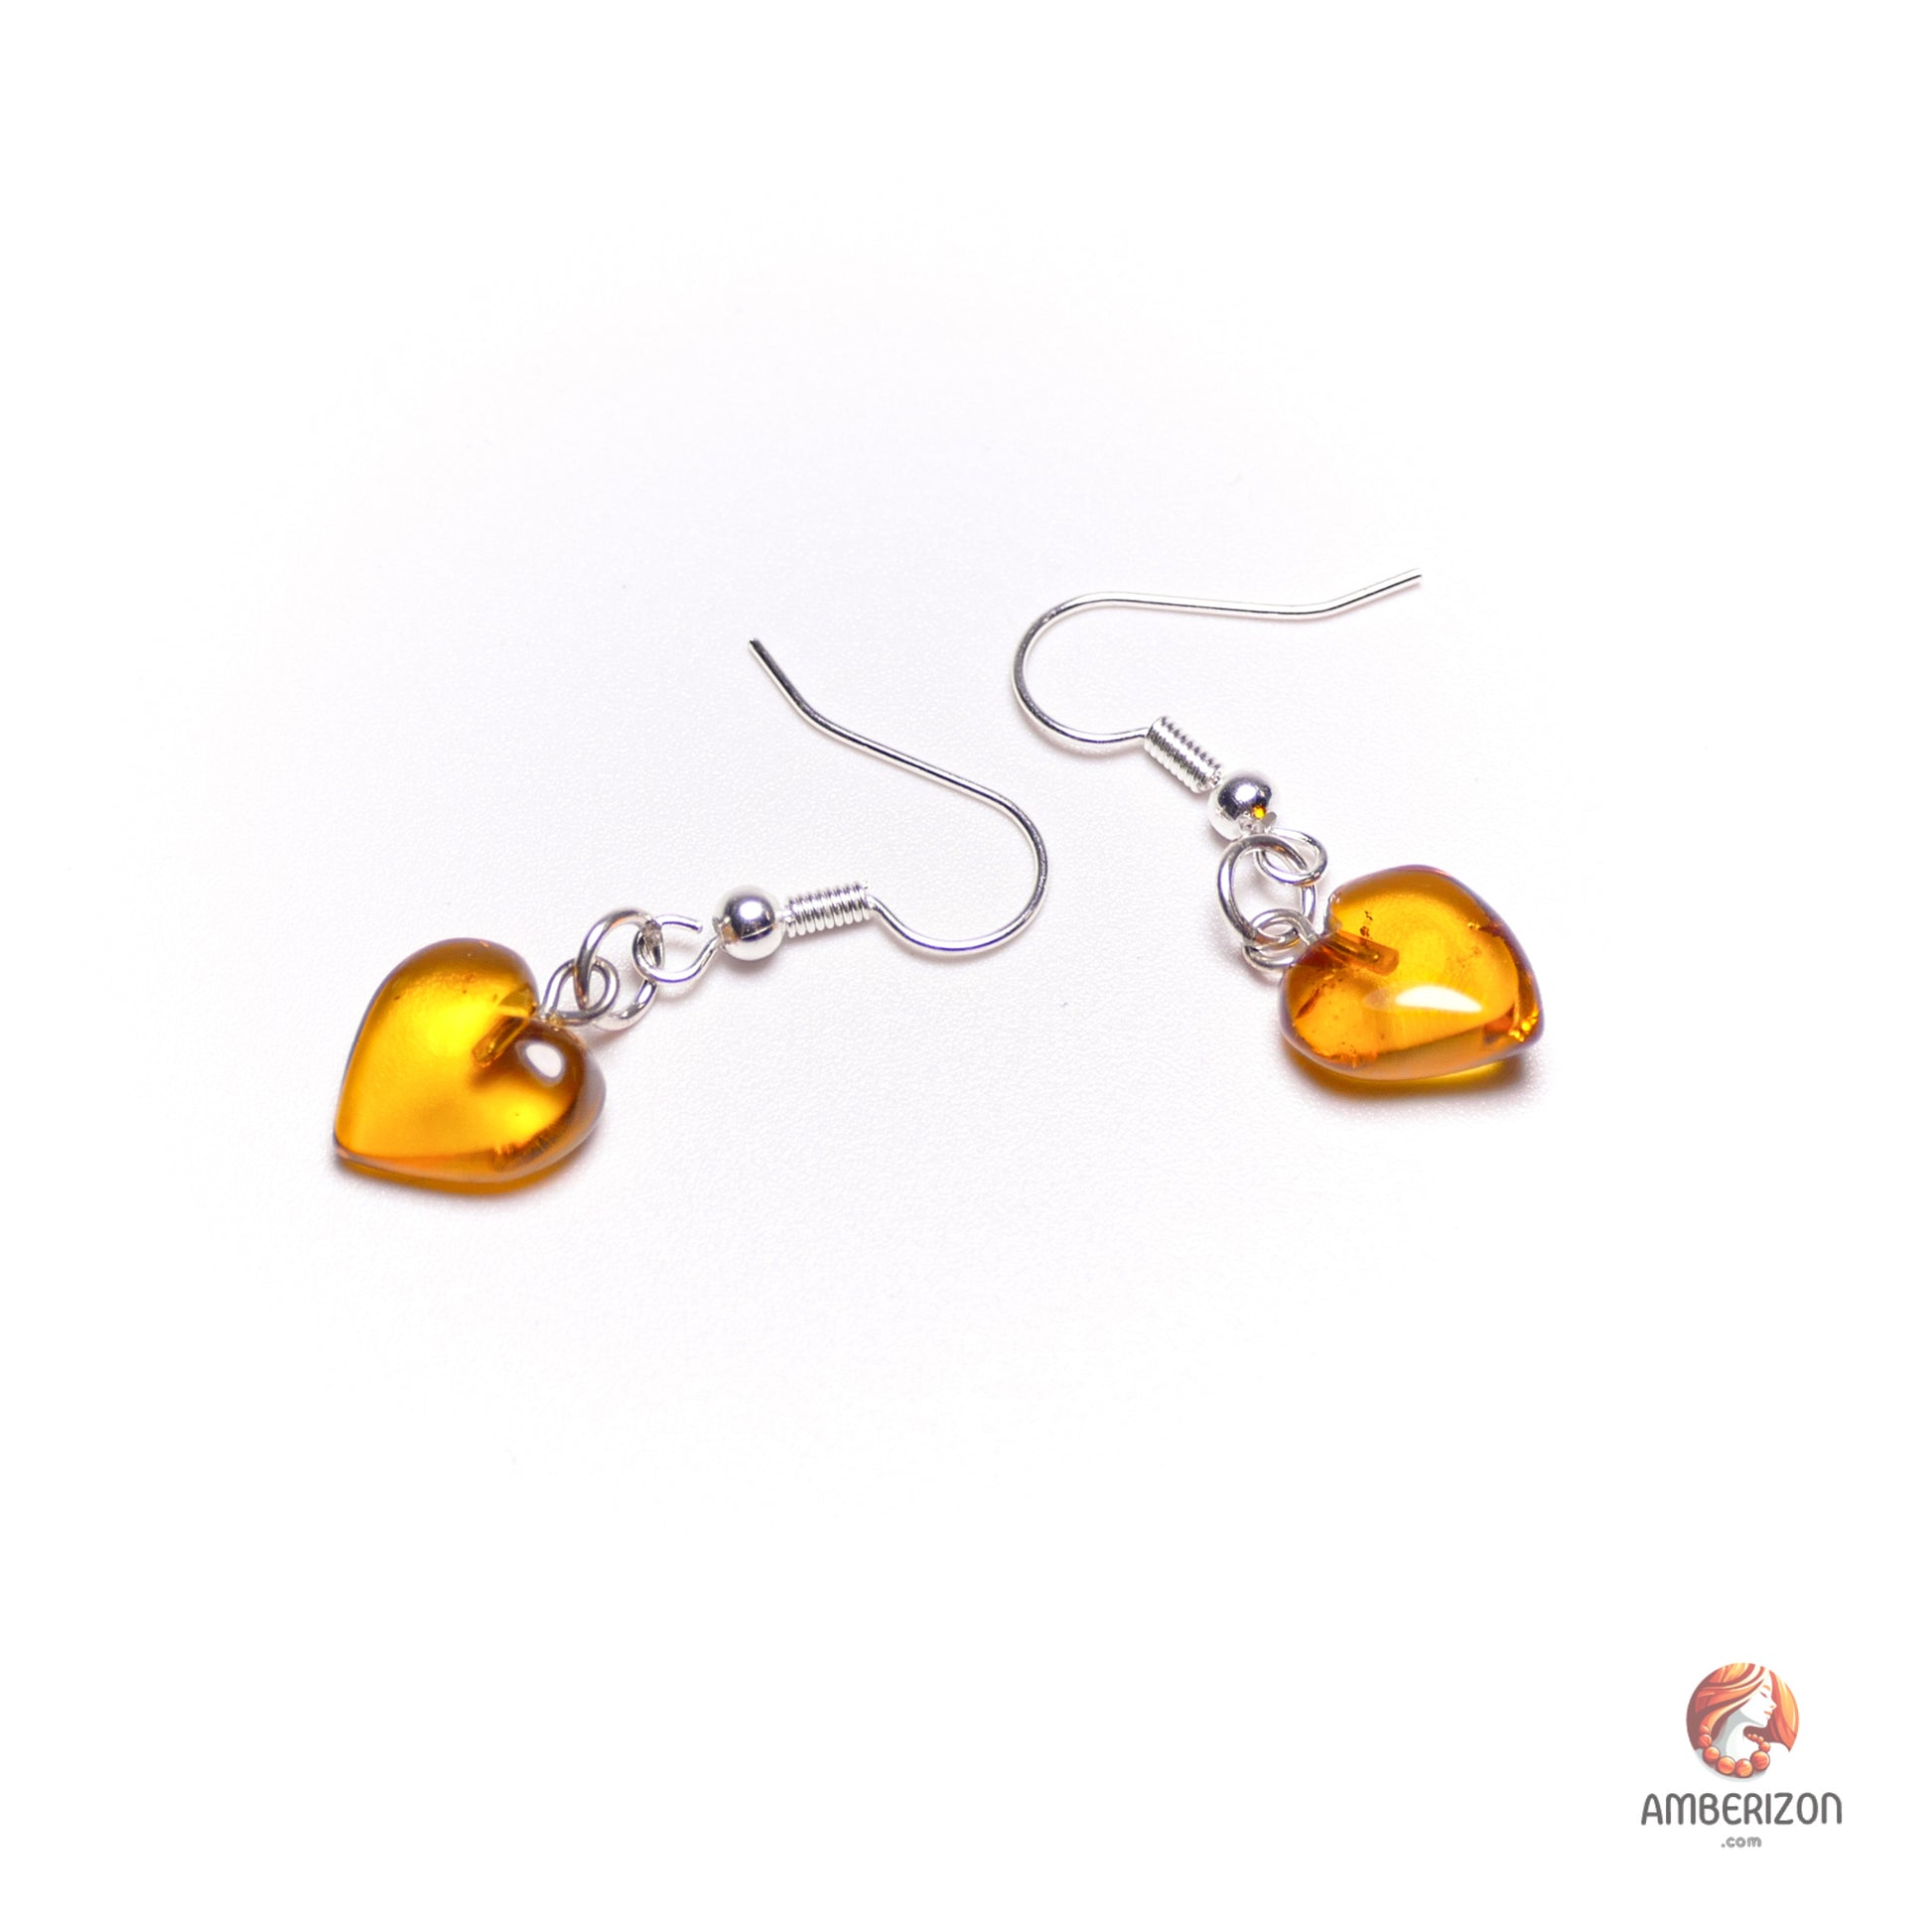 Baltic amber earrings - Honey hearts - Metal hook